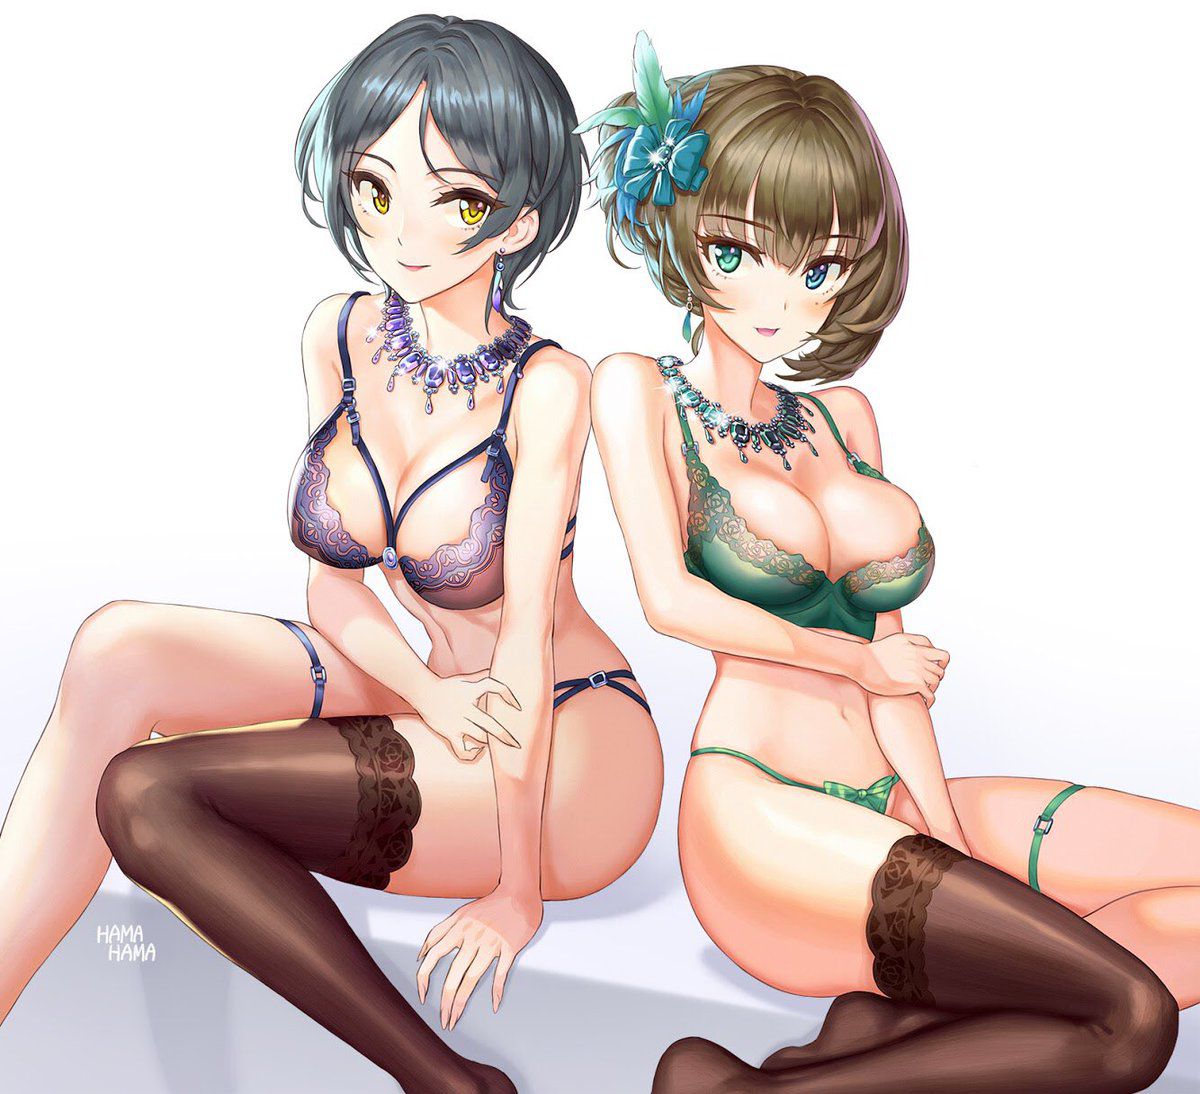 Erotic anime summary Erotic images of beautiful girls wearing lace underwear [50 photos] 37